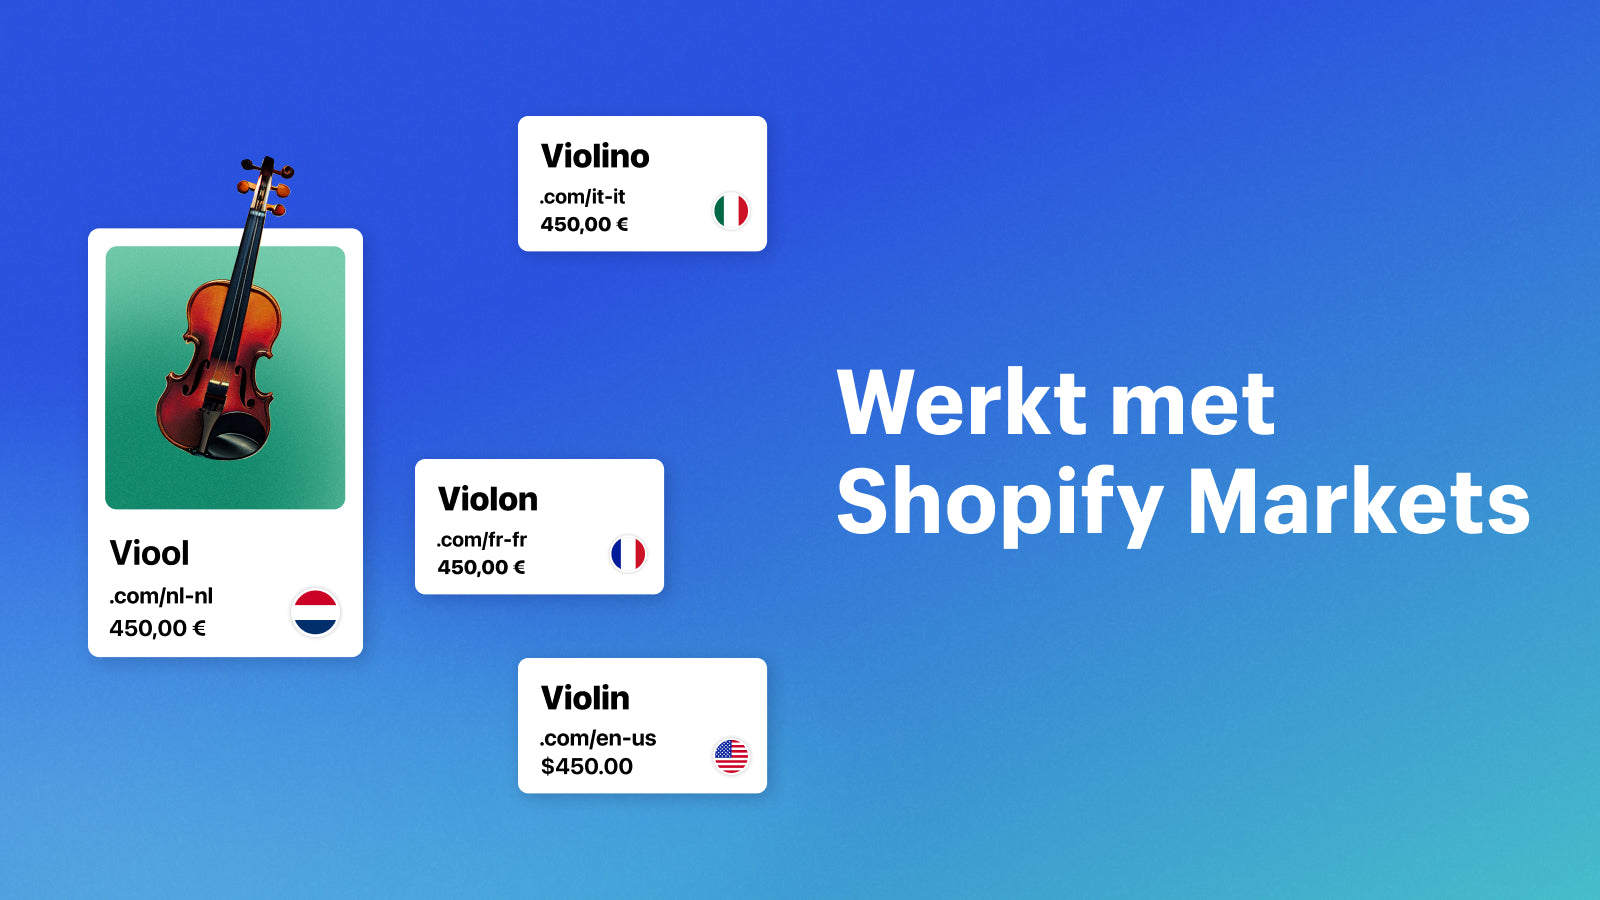 Werkt met Shopify Markets